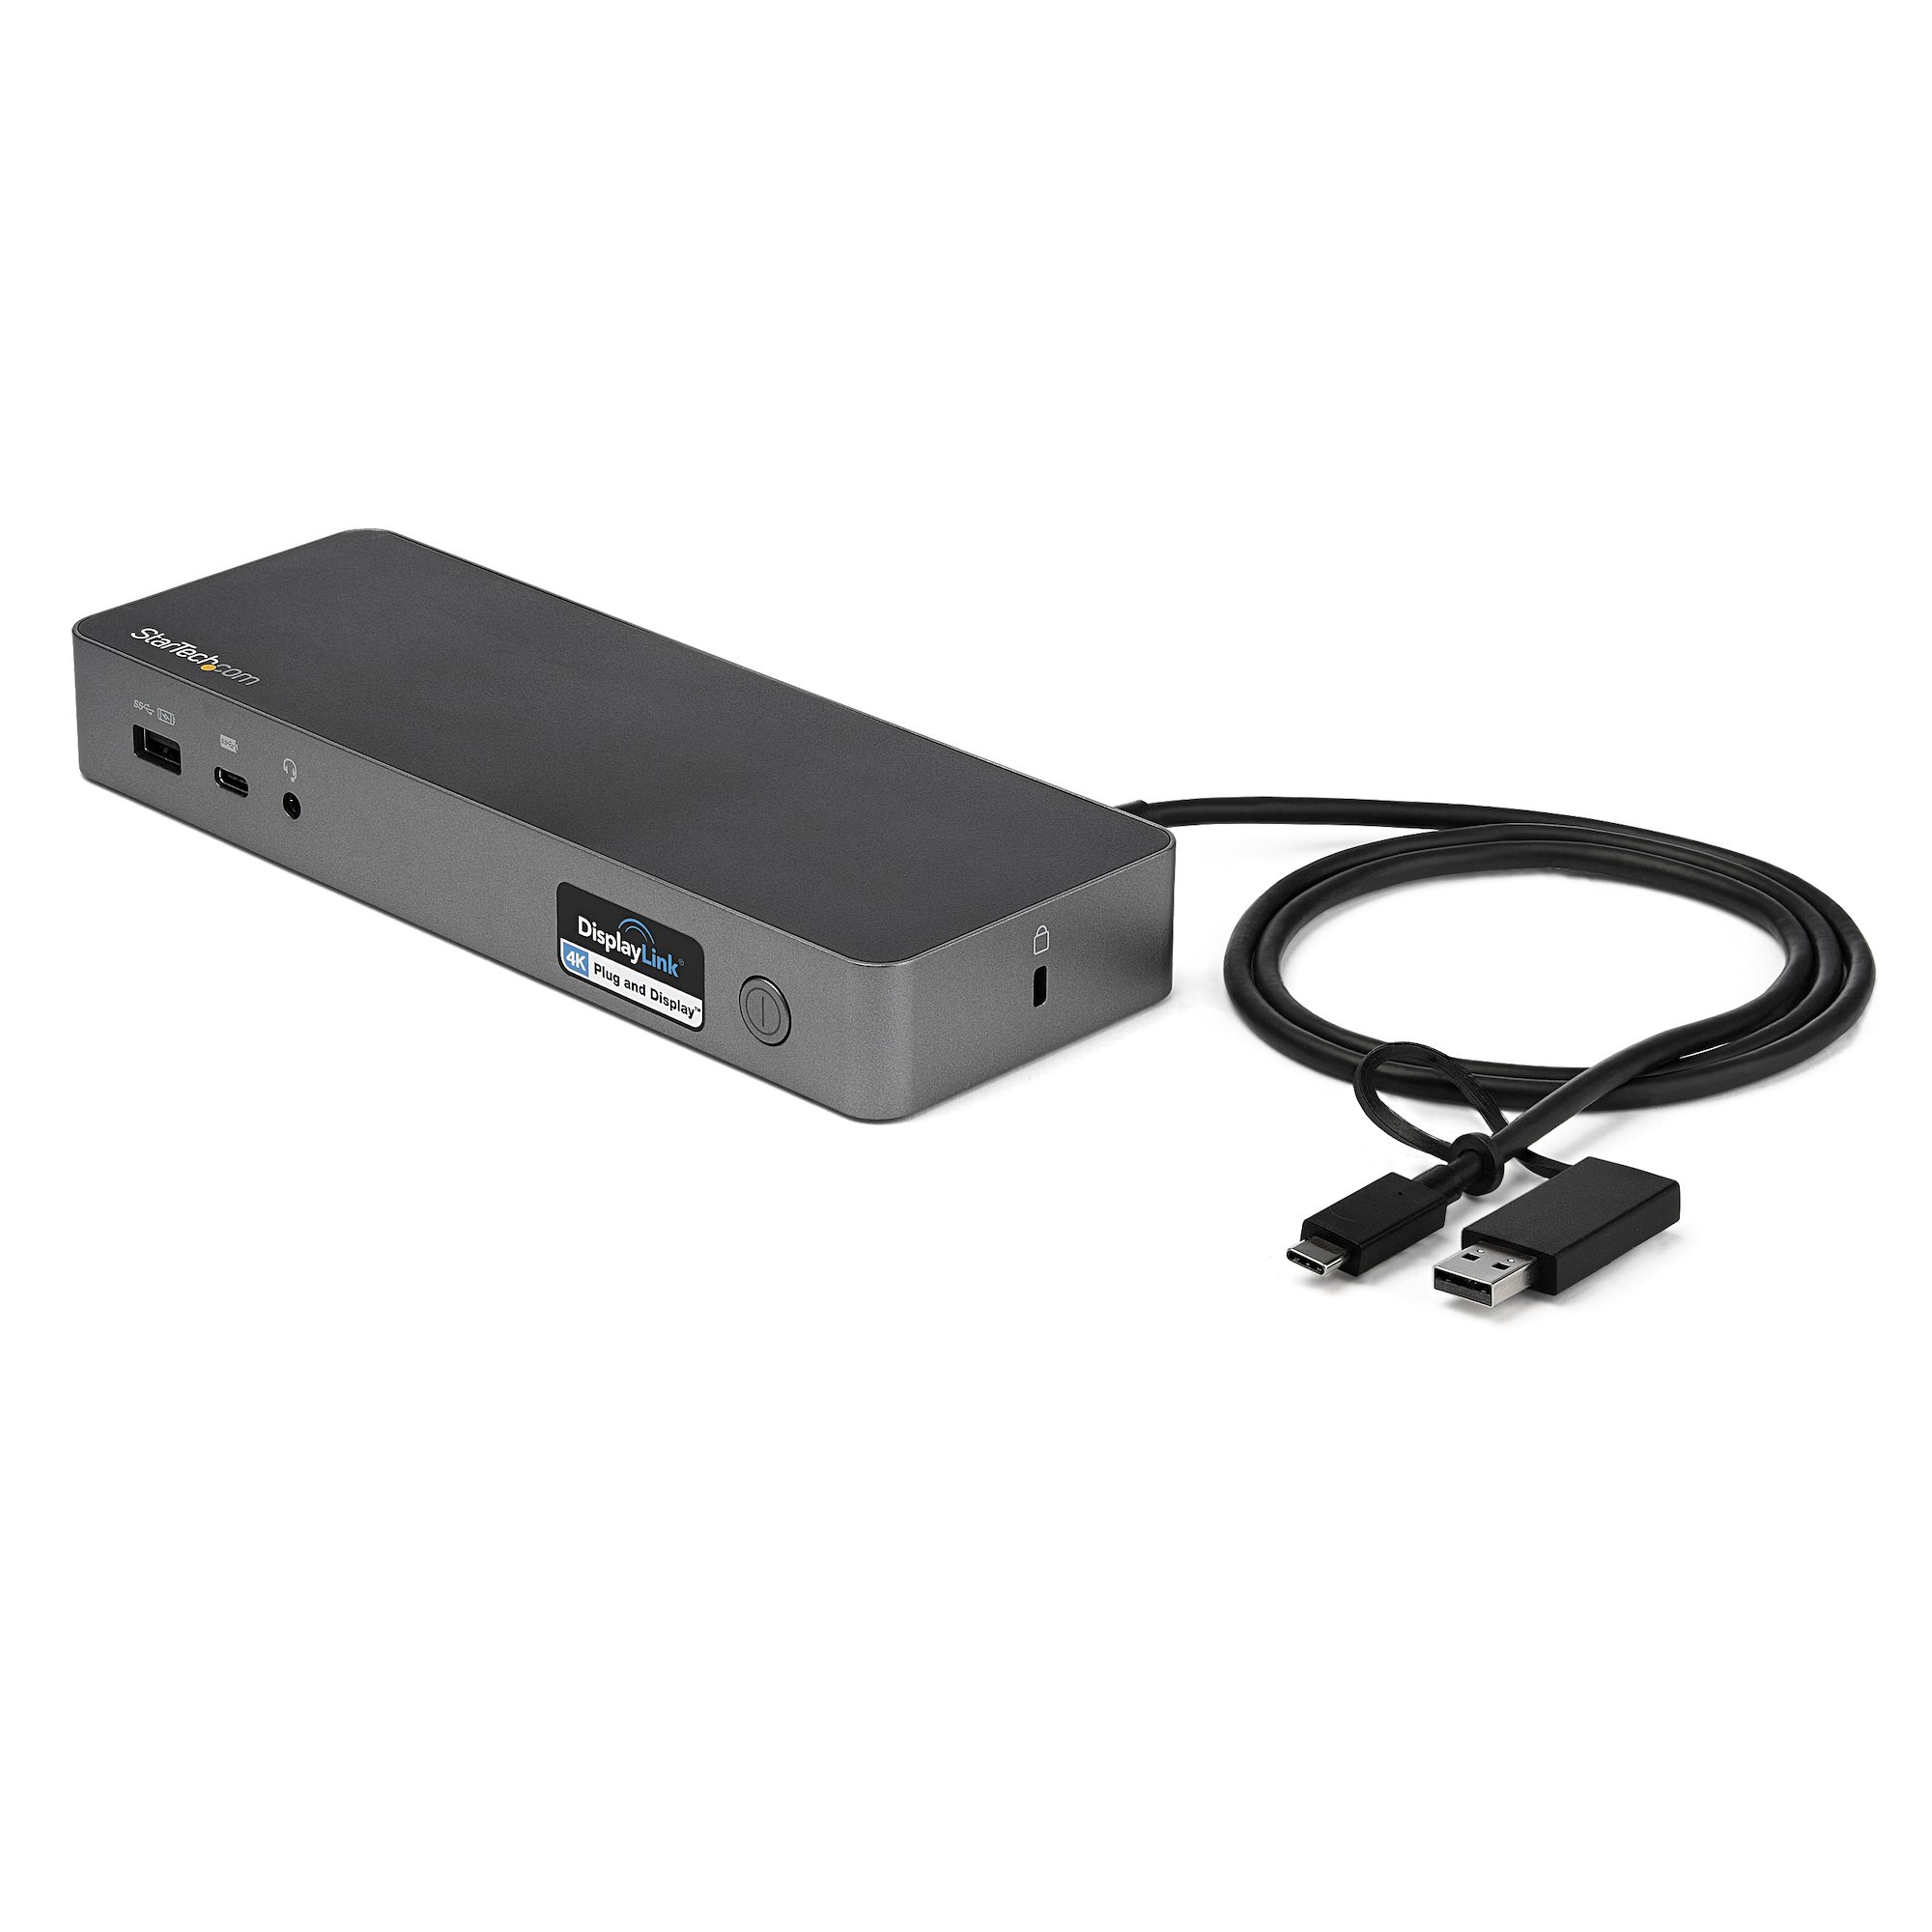 Dock Universel USB-C & USB-A - Station d'Accueil Hybride à Double Écran 4K  60Hz HDMI & Displayport - Hub USB 3.1 Gen 1 - GbE - 60W Power Delivery 